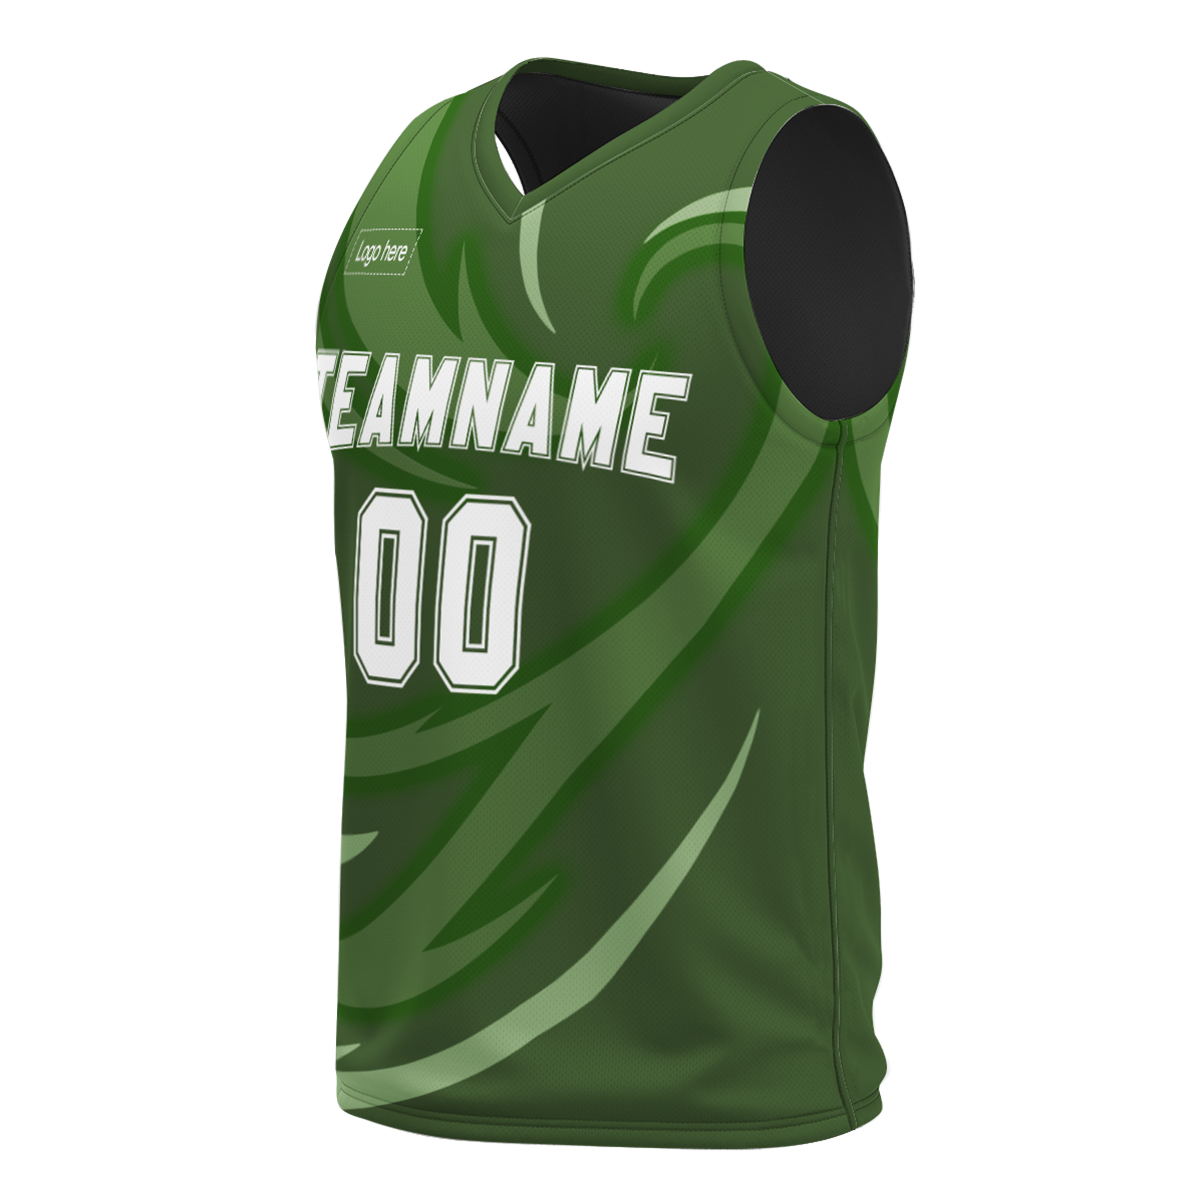 factory-oem-service-custom-basketball-uniforms-printed-sport-clothes-summer-basketball-jerseys-at-cj-pod-5